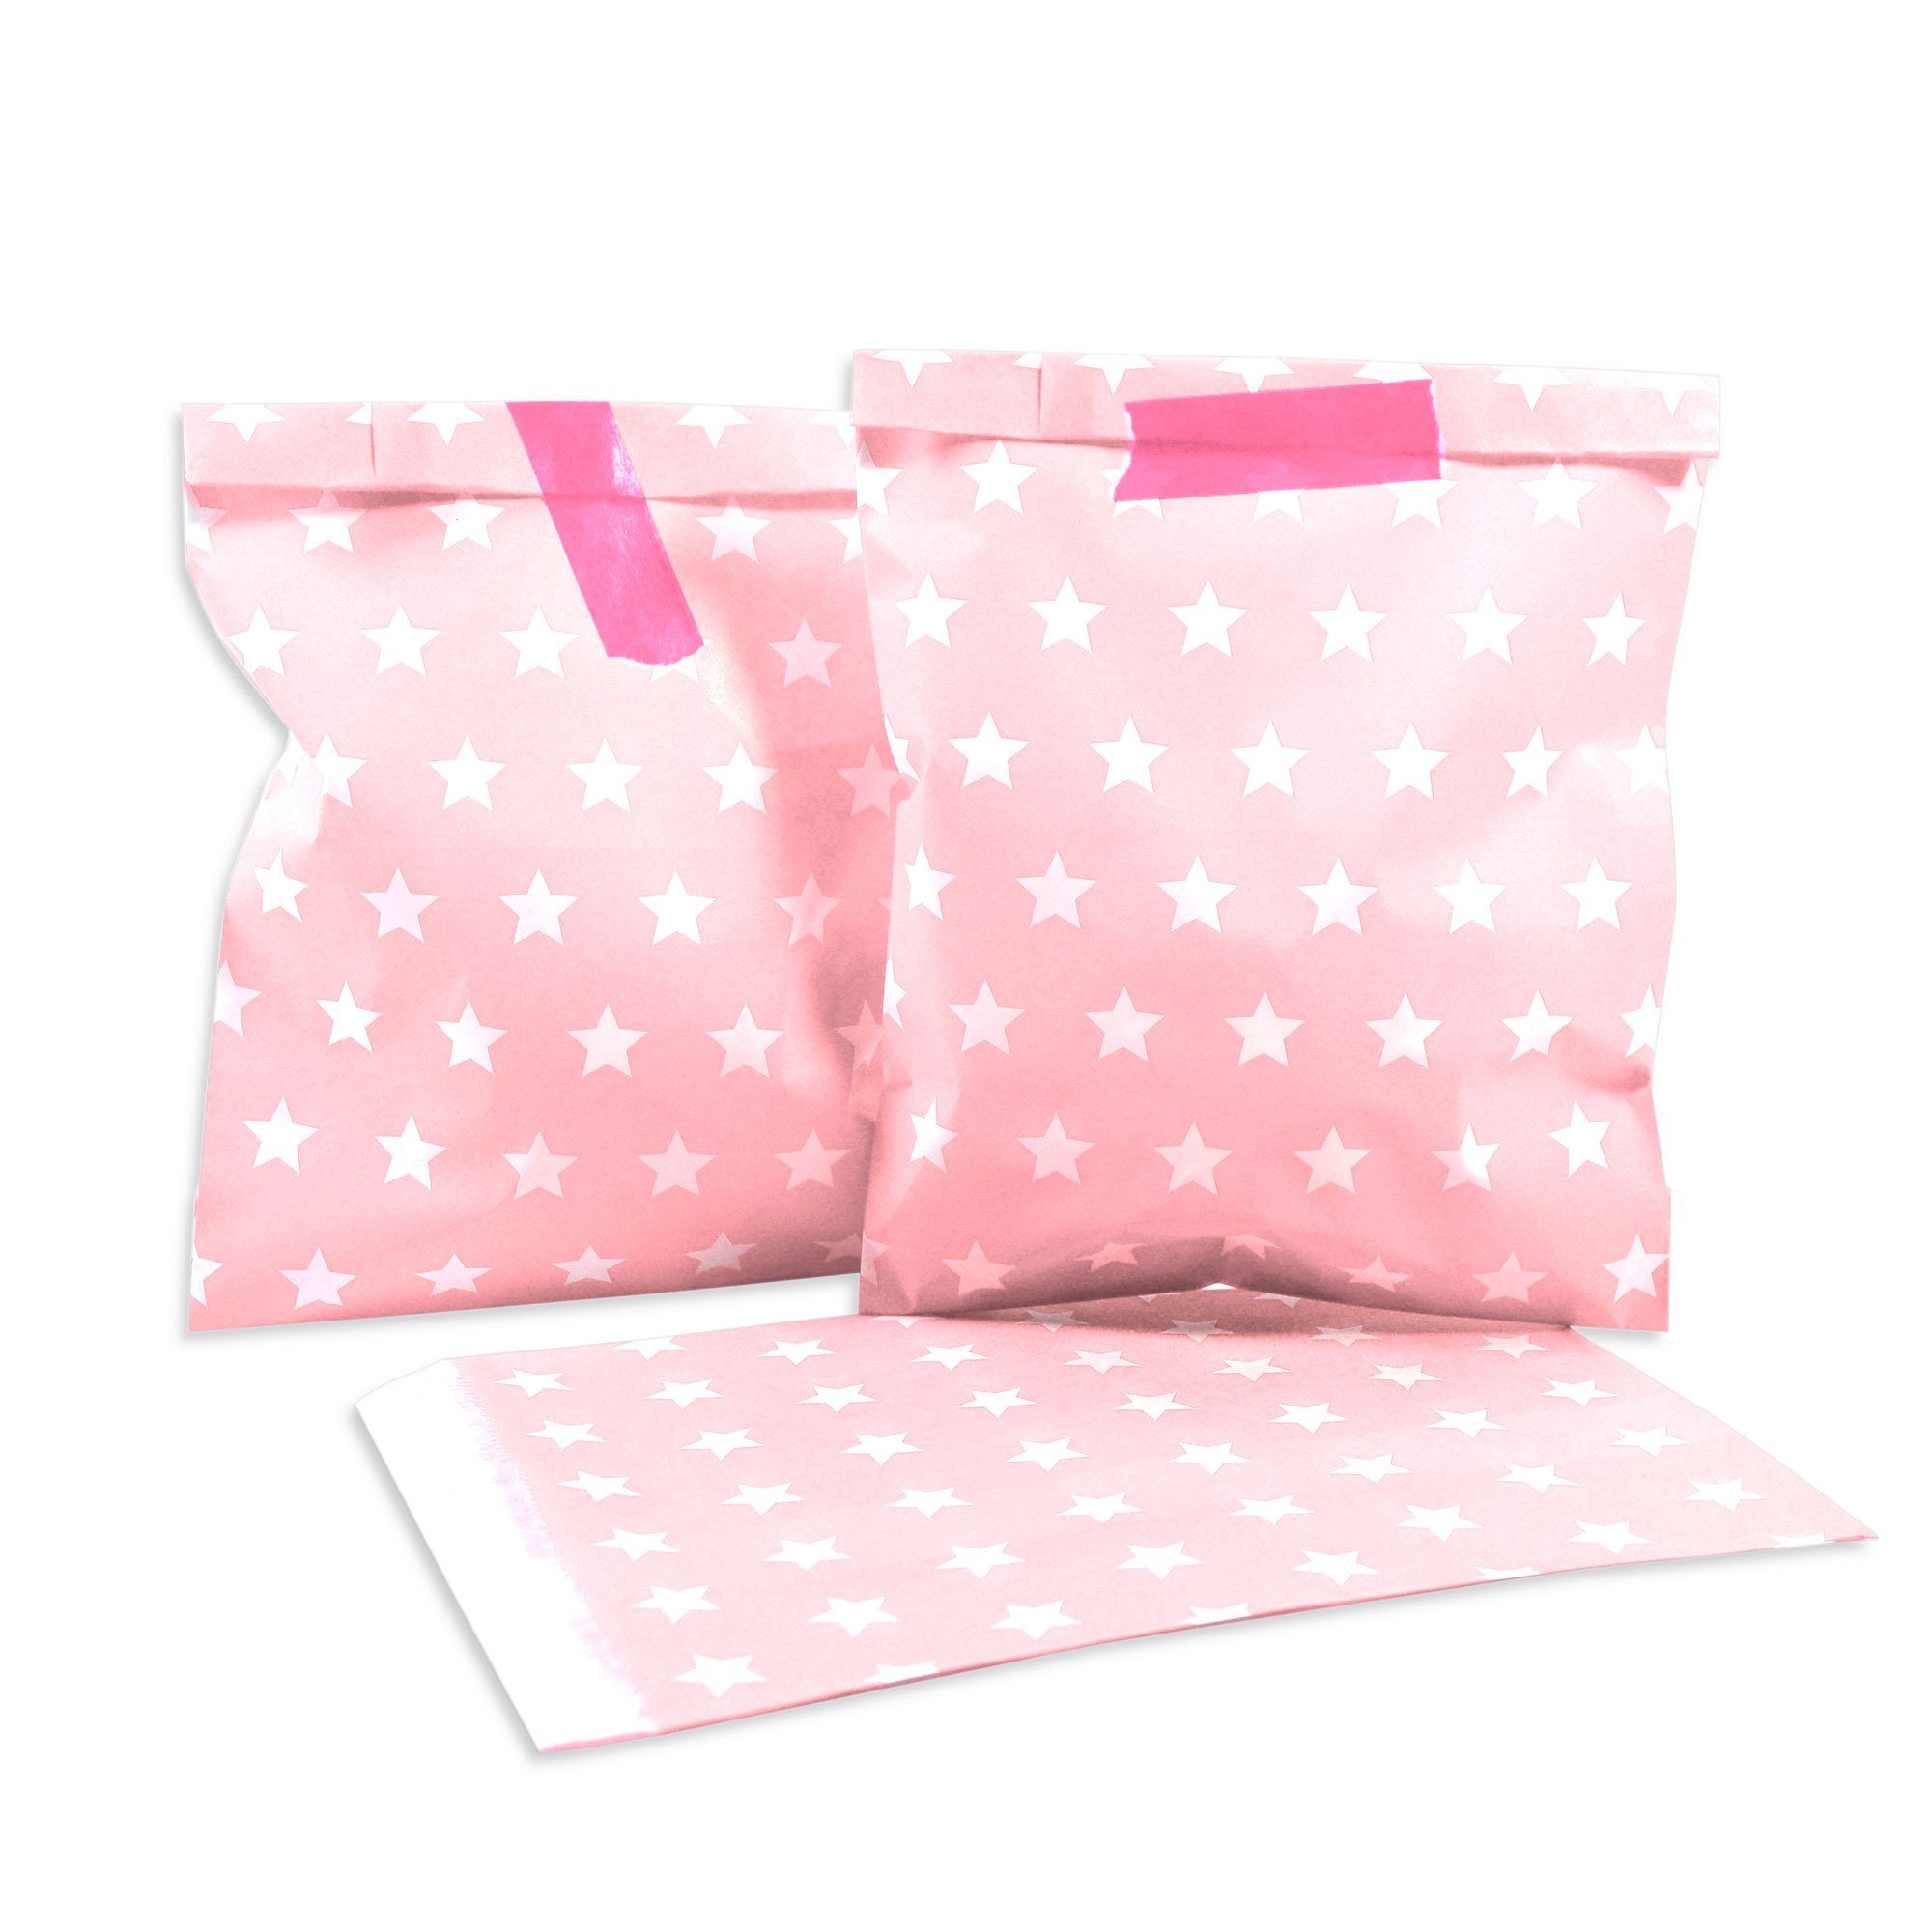 Frau WUNDERVoll Papierdekoration Papiertüten - rosa, weiße Sterne | Partydekoration